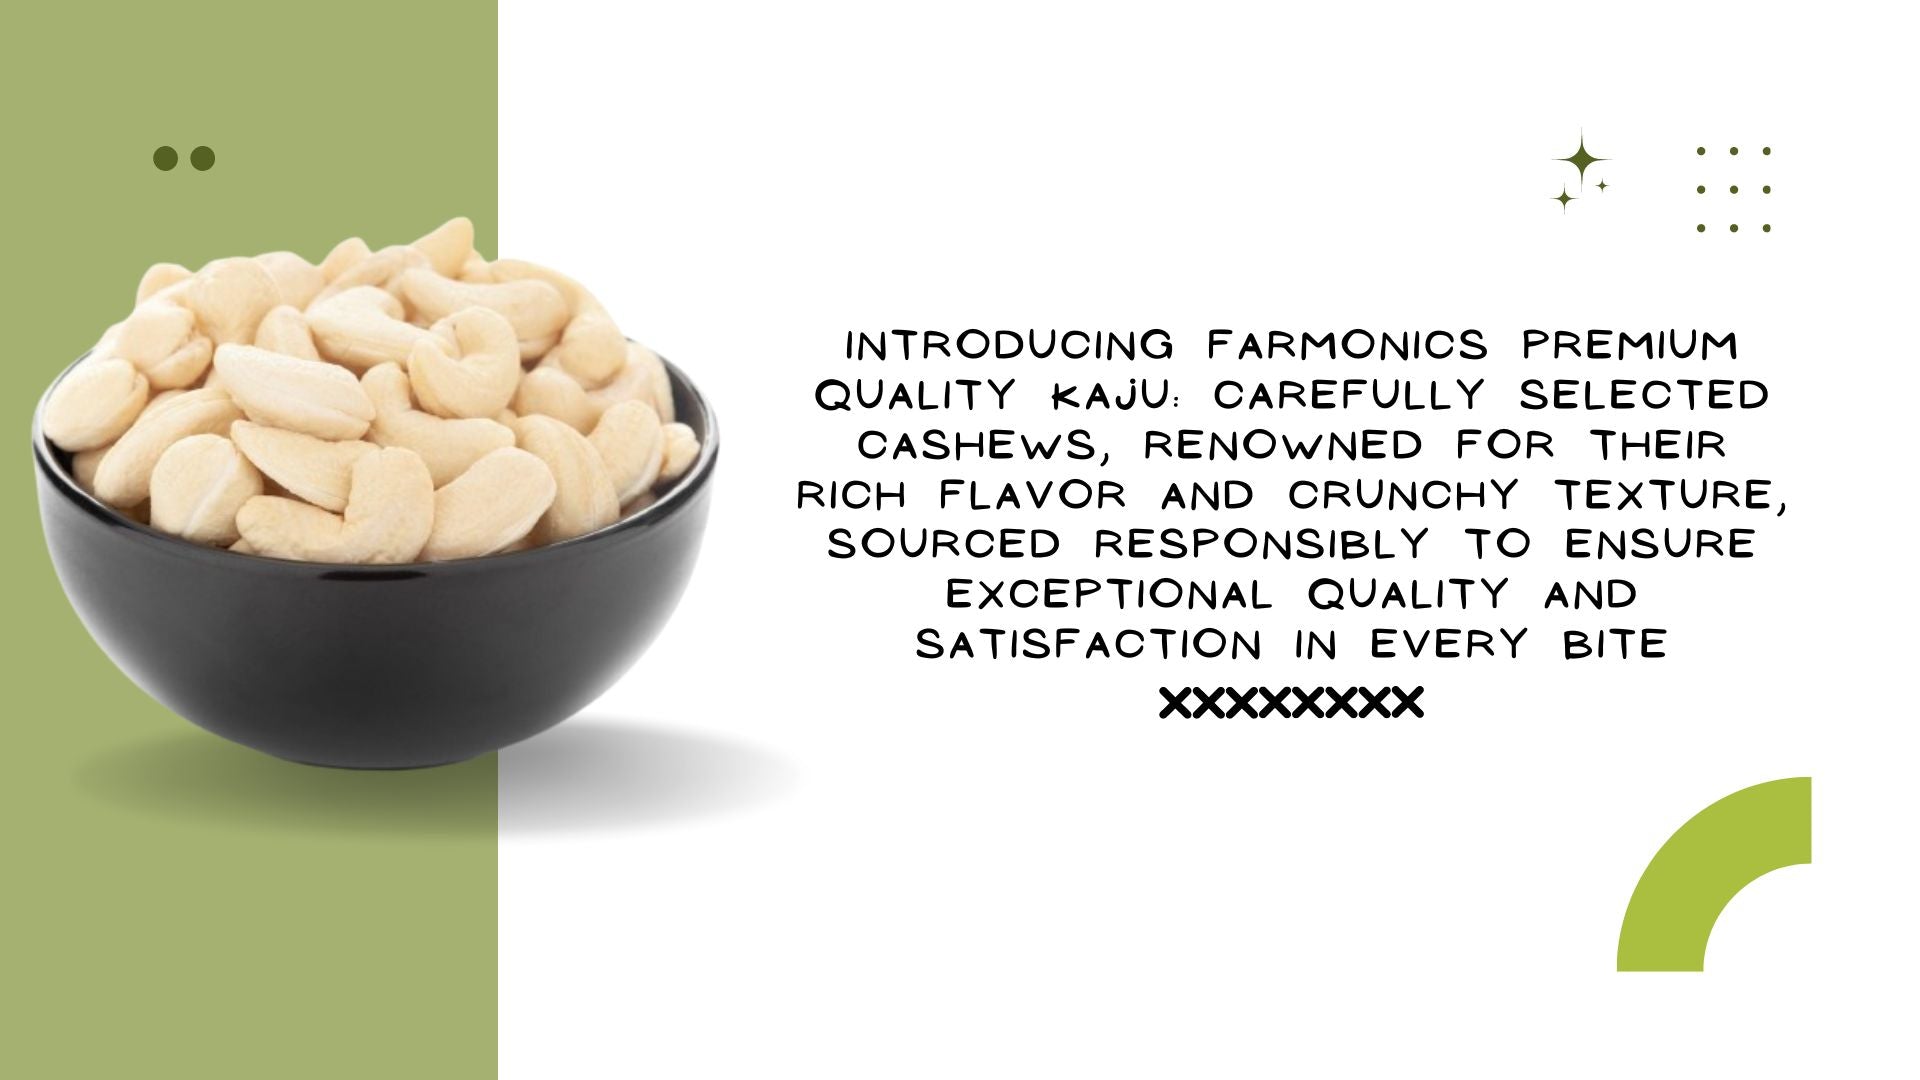 Here are some of the information about farmonics premioum quality   Kaju/cashew 